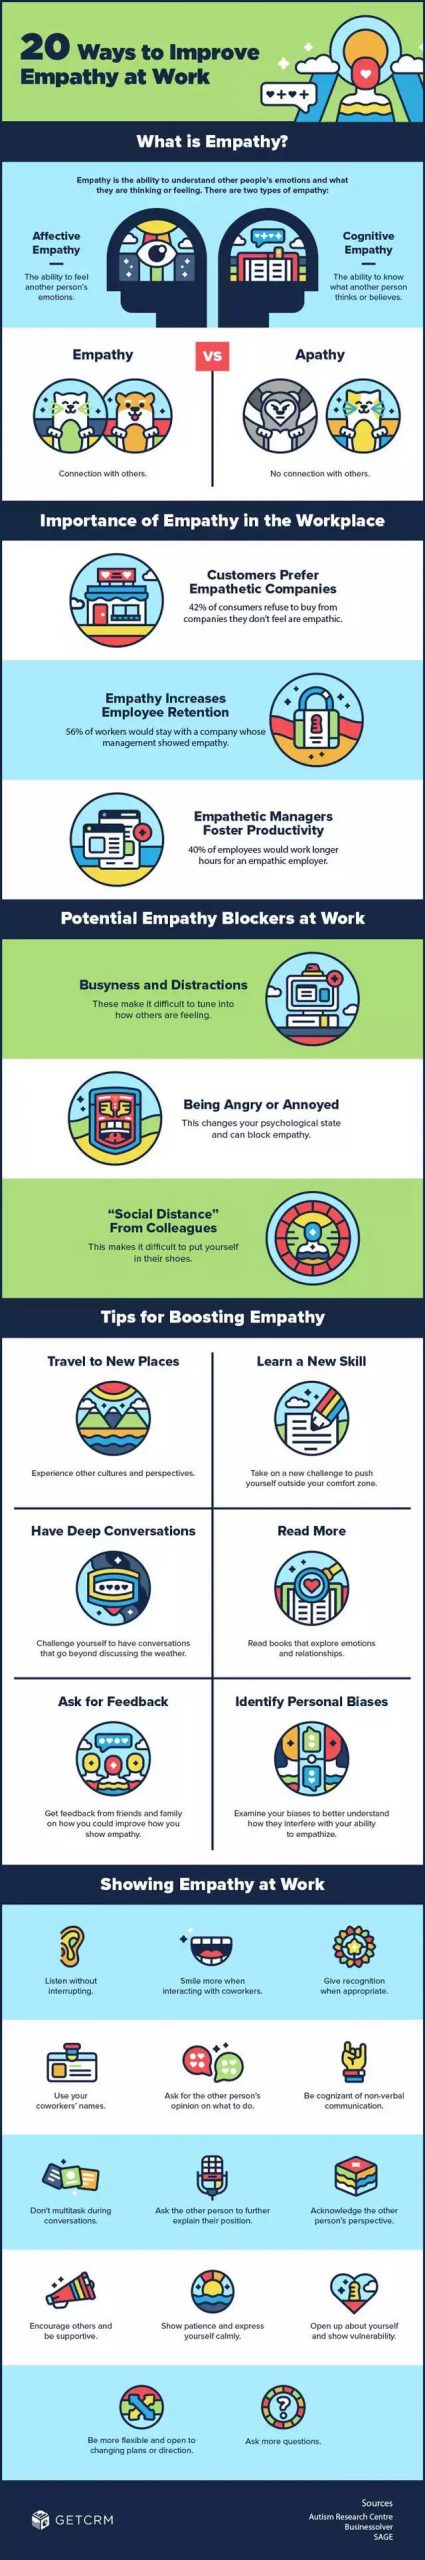 Ways to Improve Empathy at Work